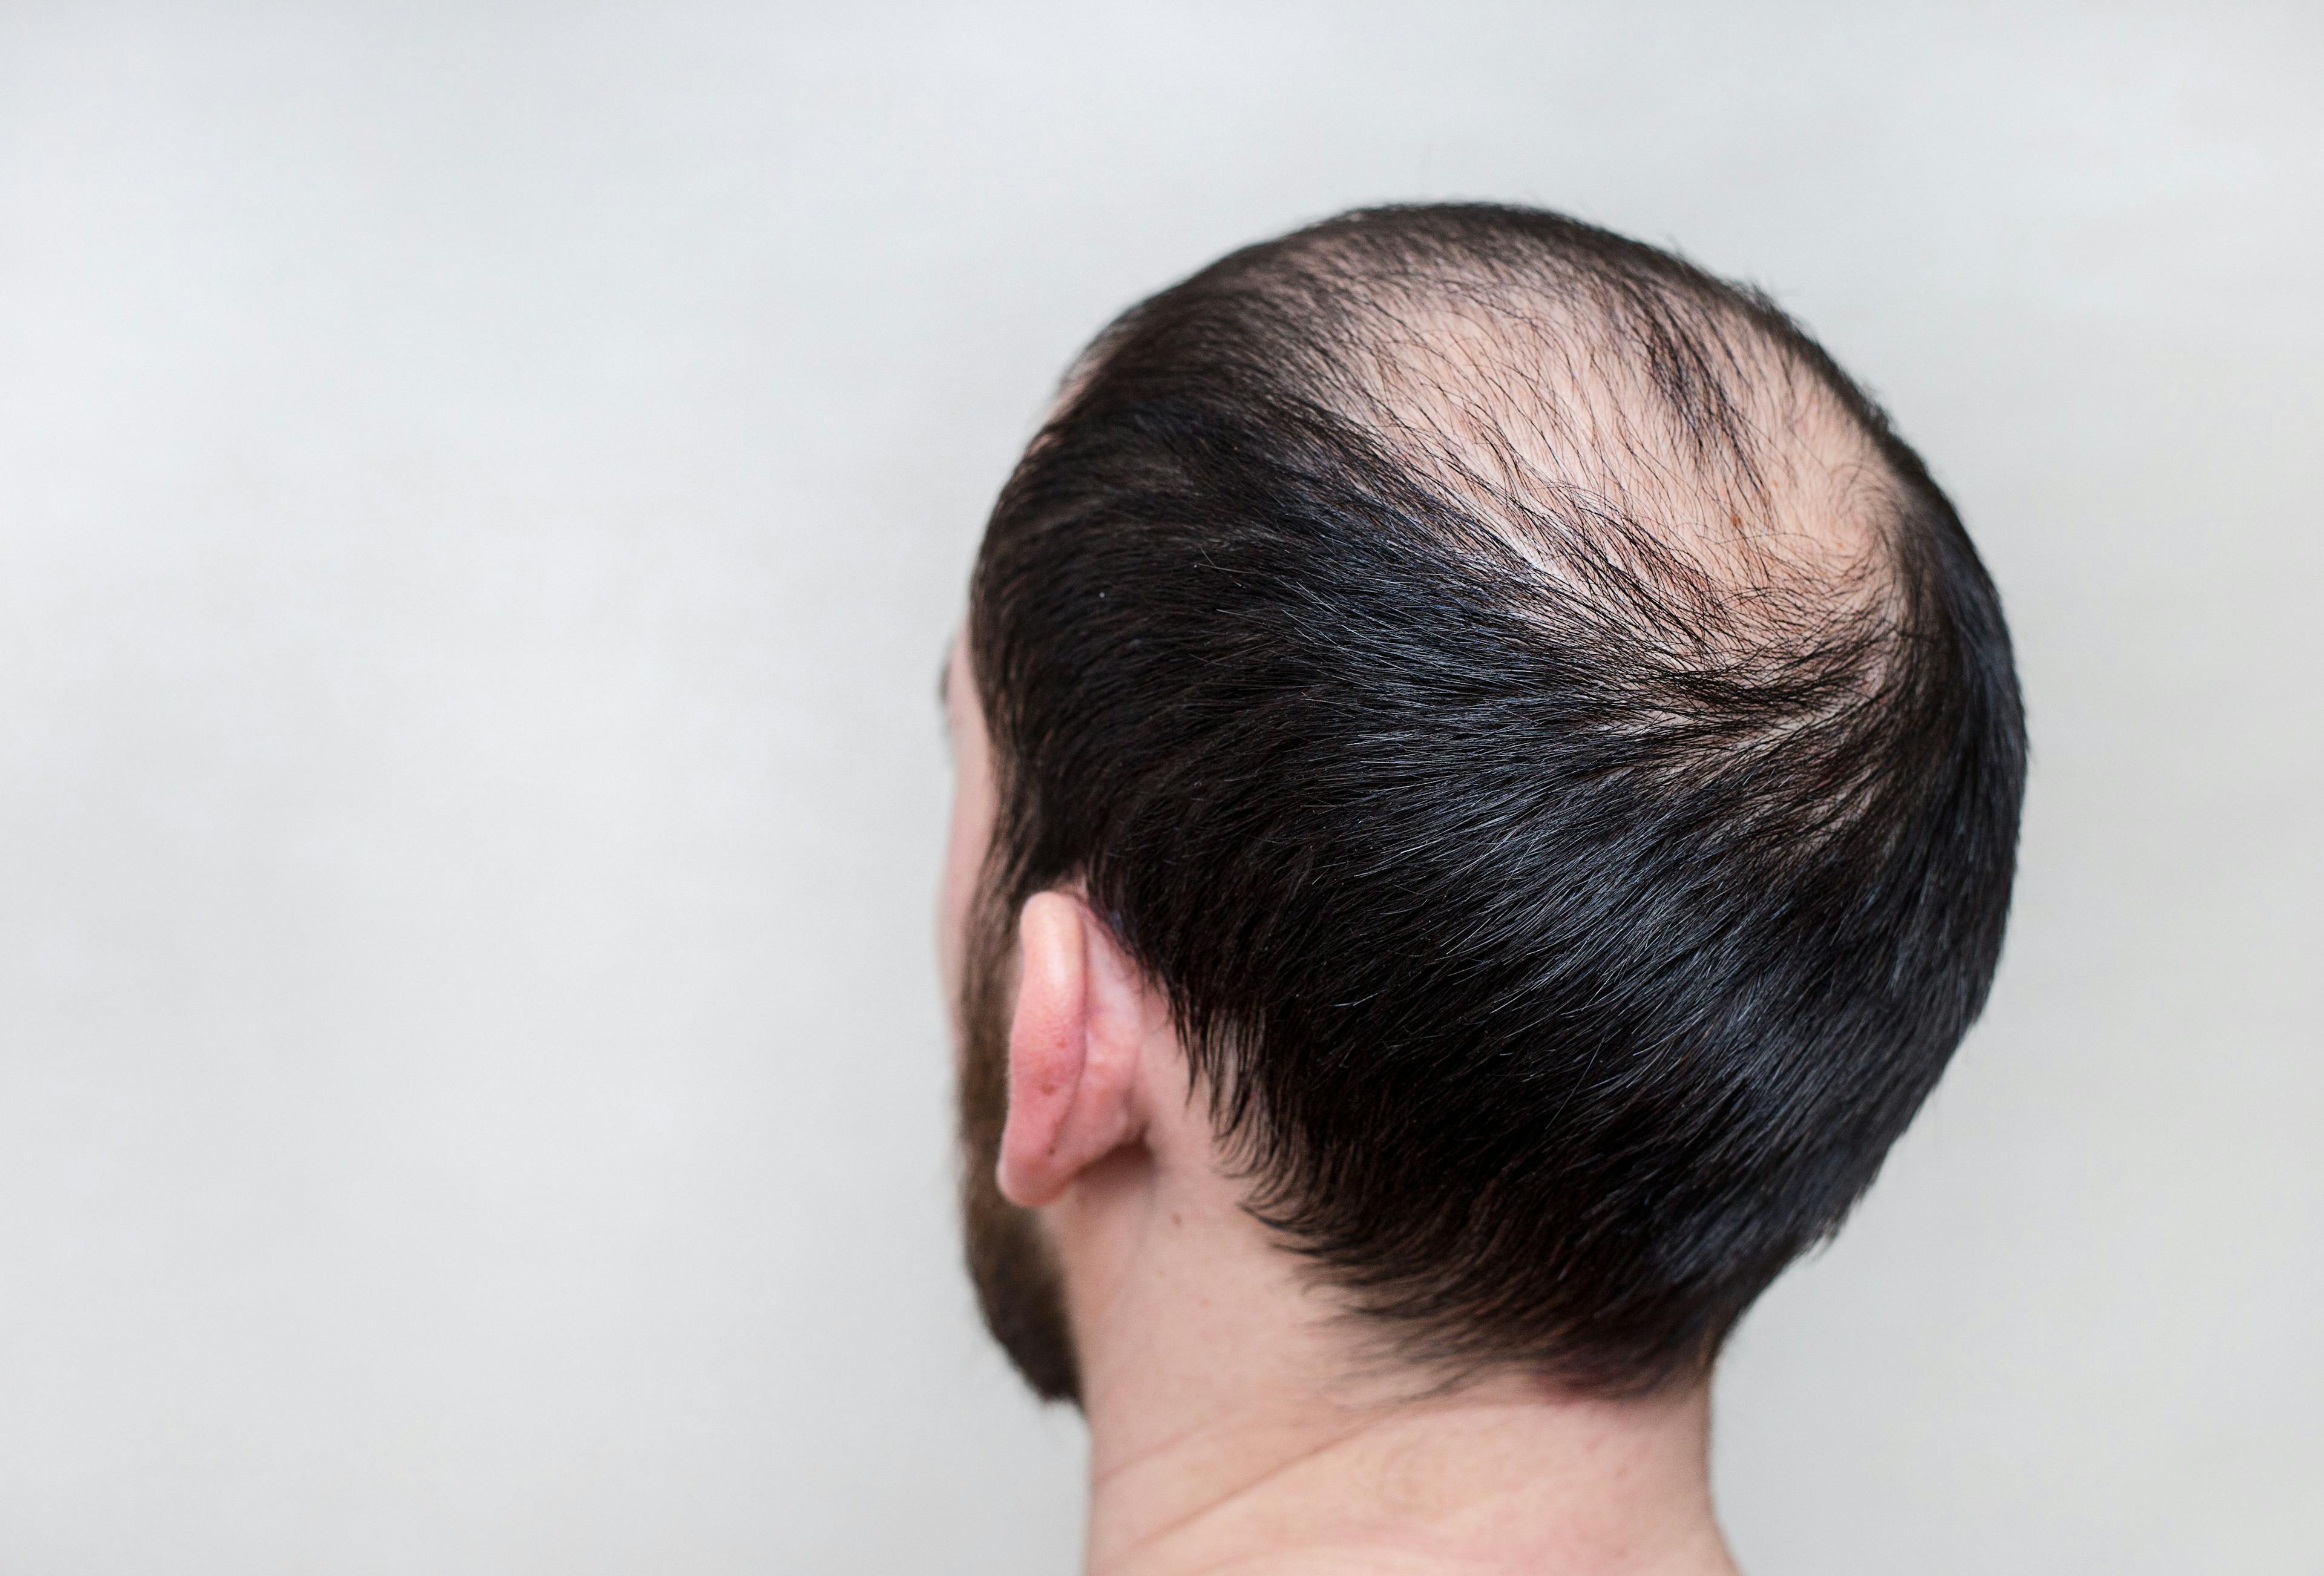 Antihistamines effective in alopecia areata study